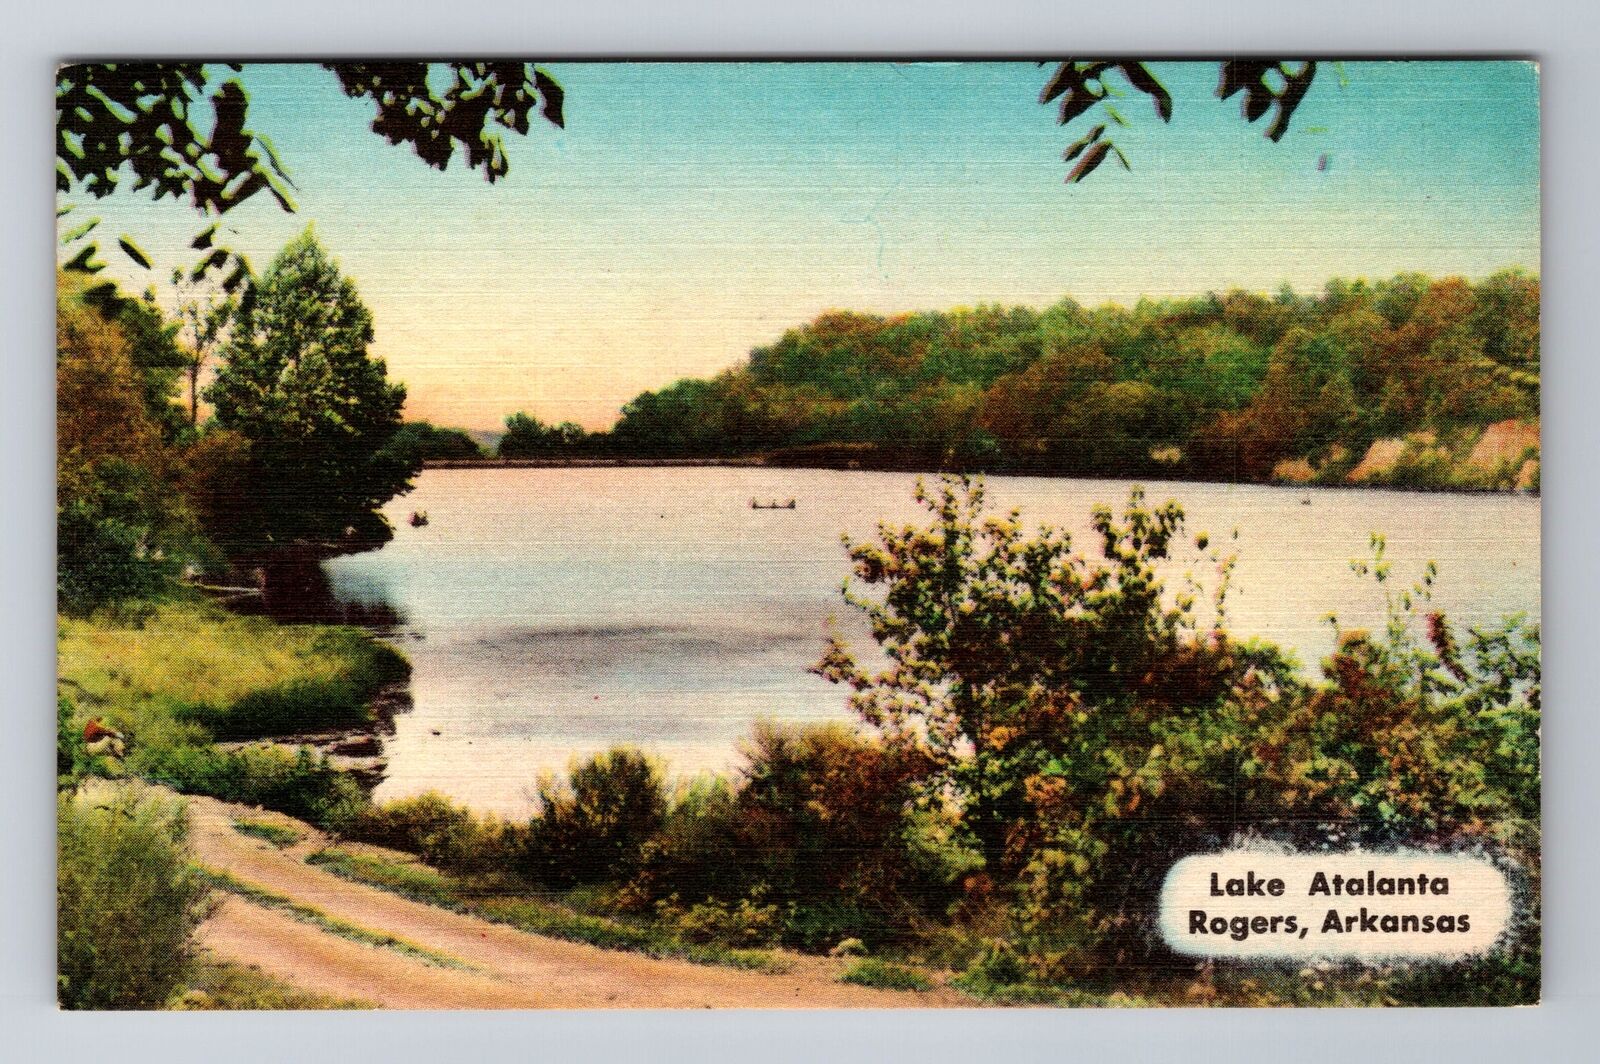 Rogers AR-Arkansas, Lake Atalanta, Antique Vintage Souvenir Postcard